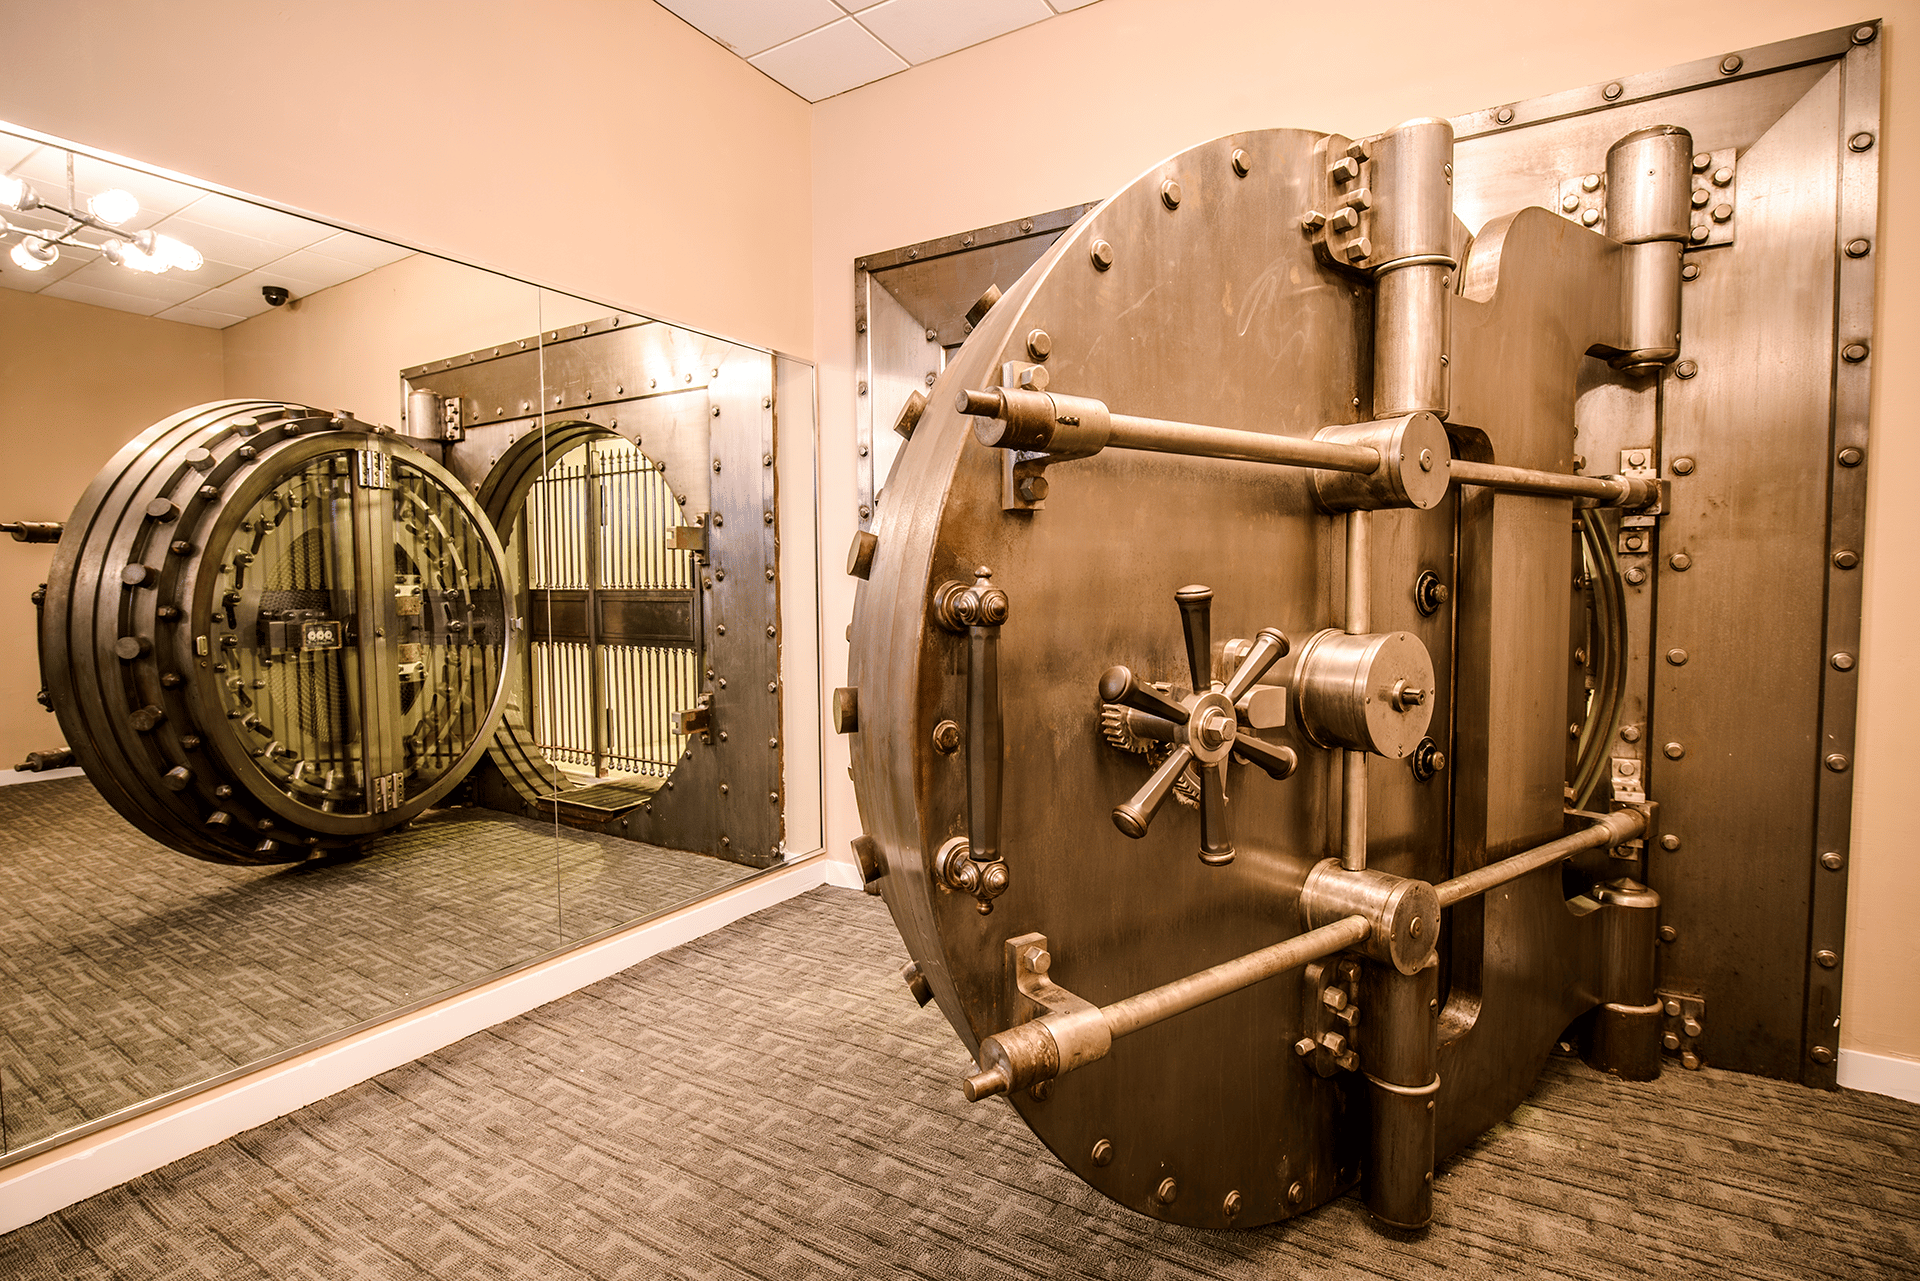 Bank vaults